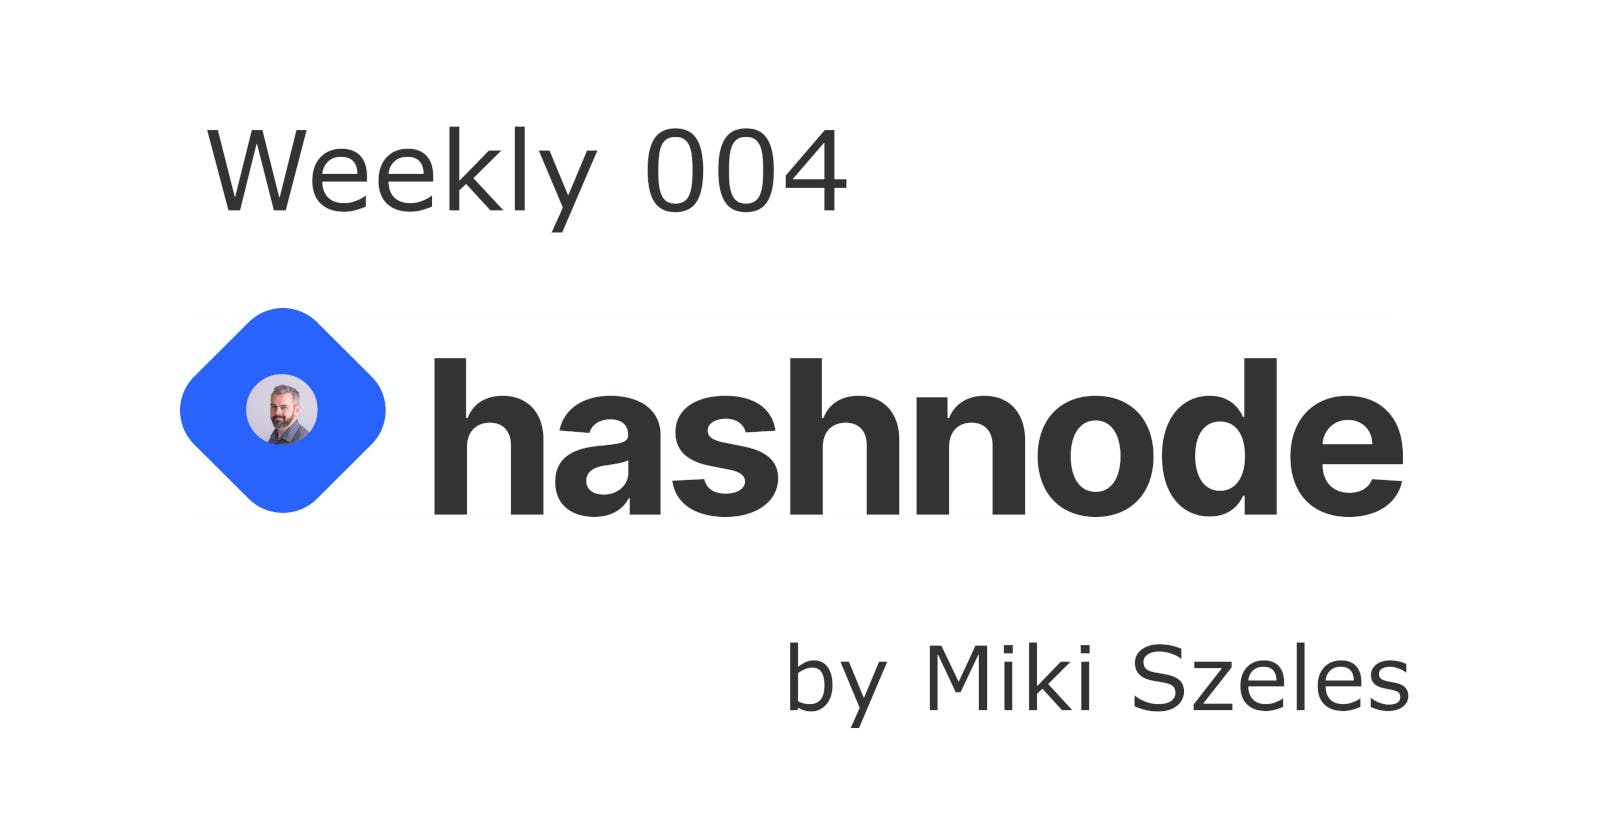 Hashnode Weekly 004 by Miki Szeles